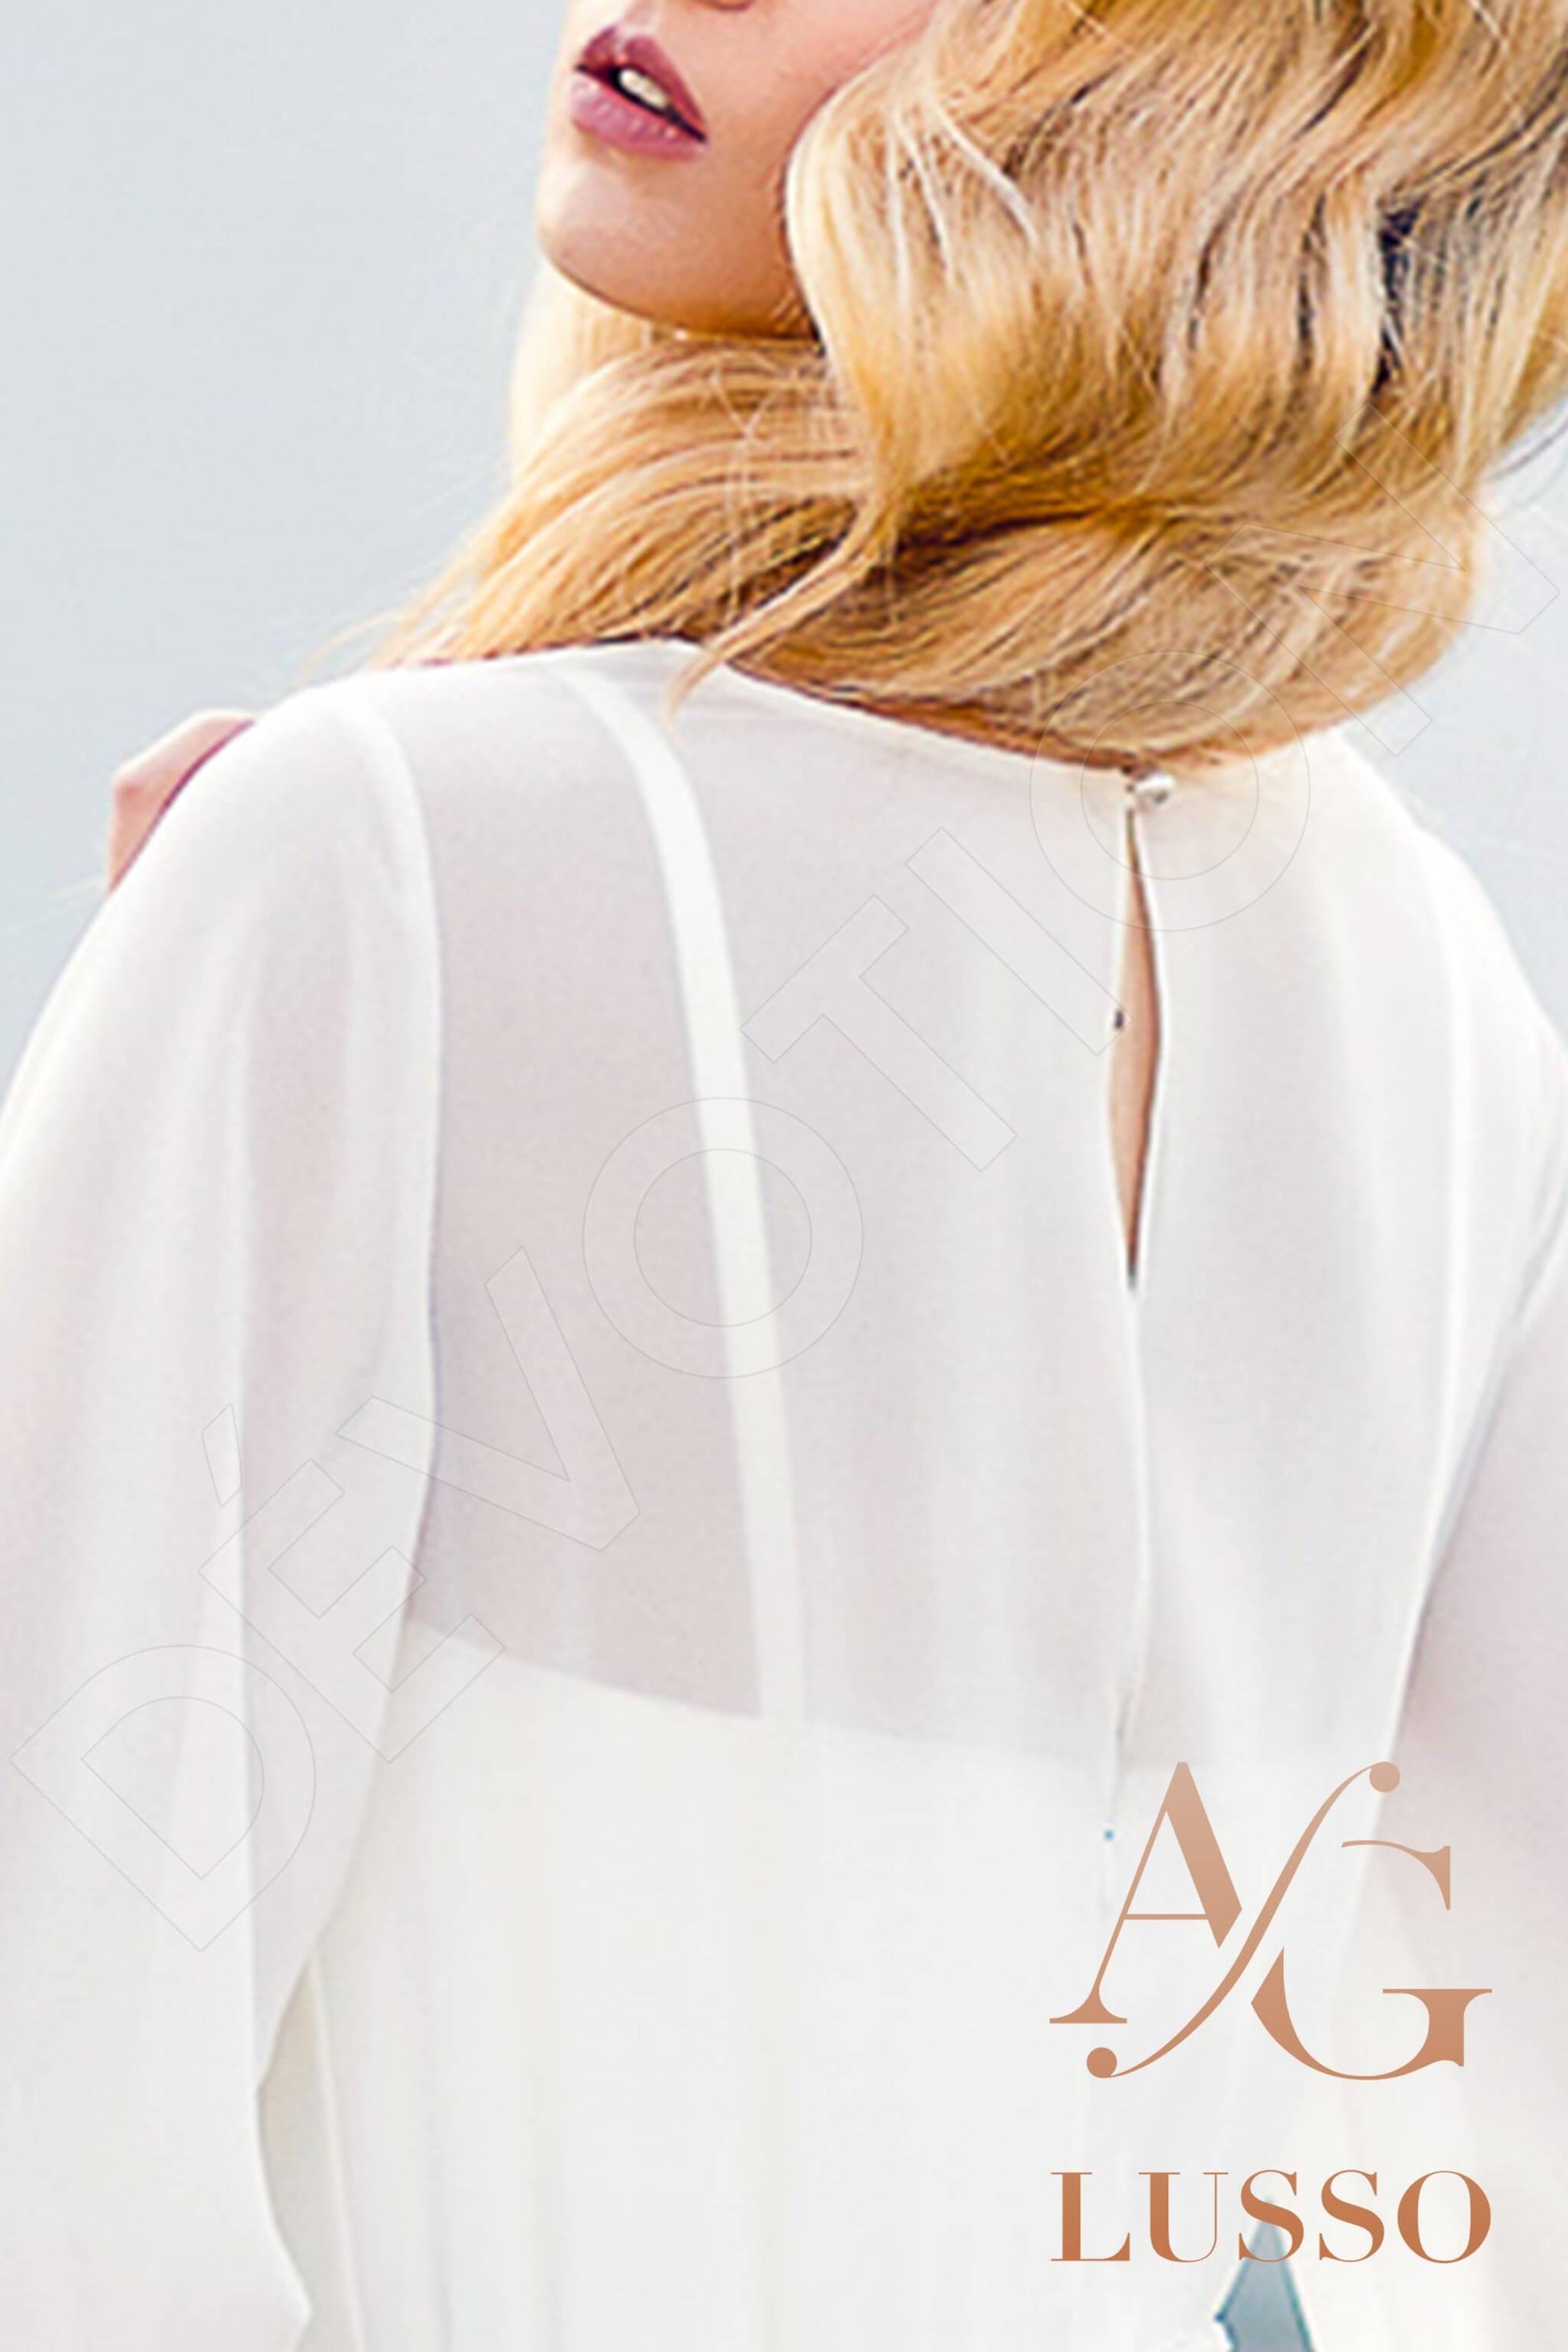 Modesta A-line V-neck White Wedding dress